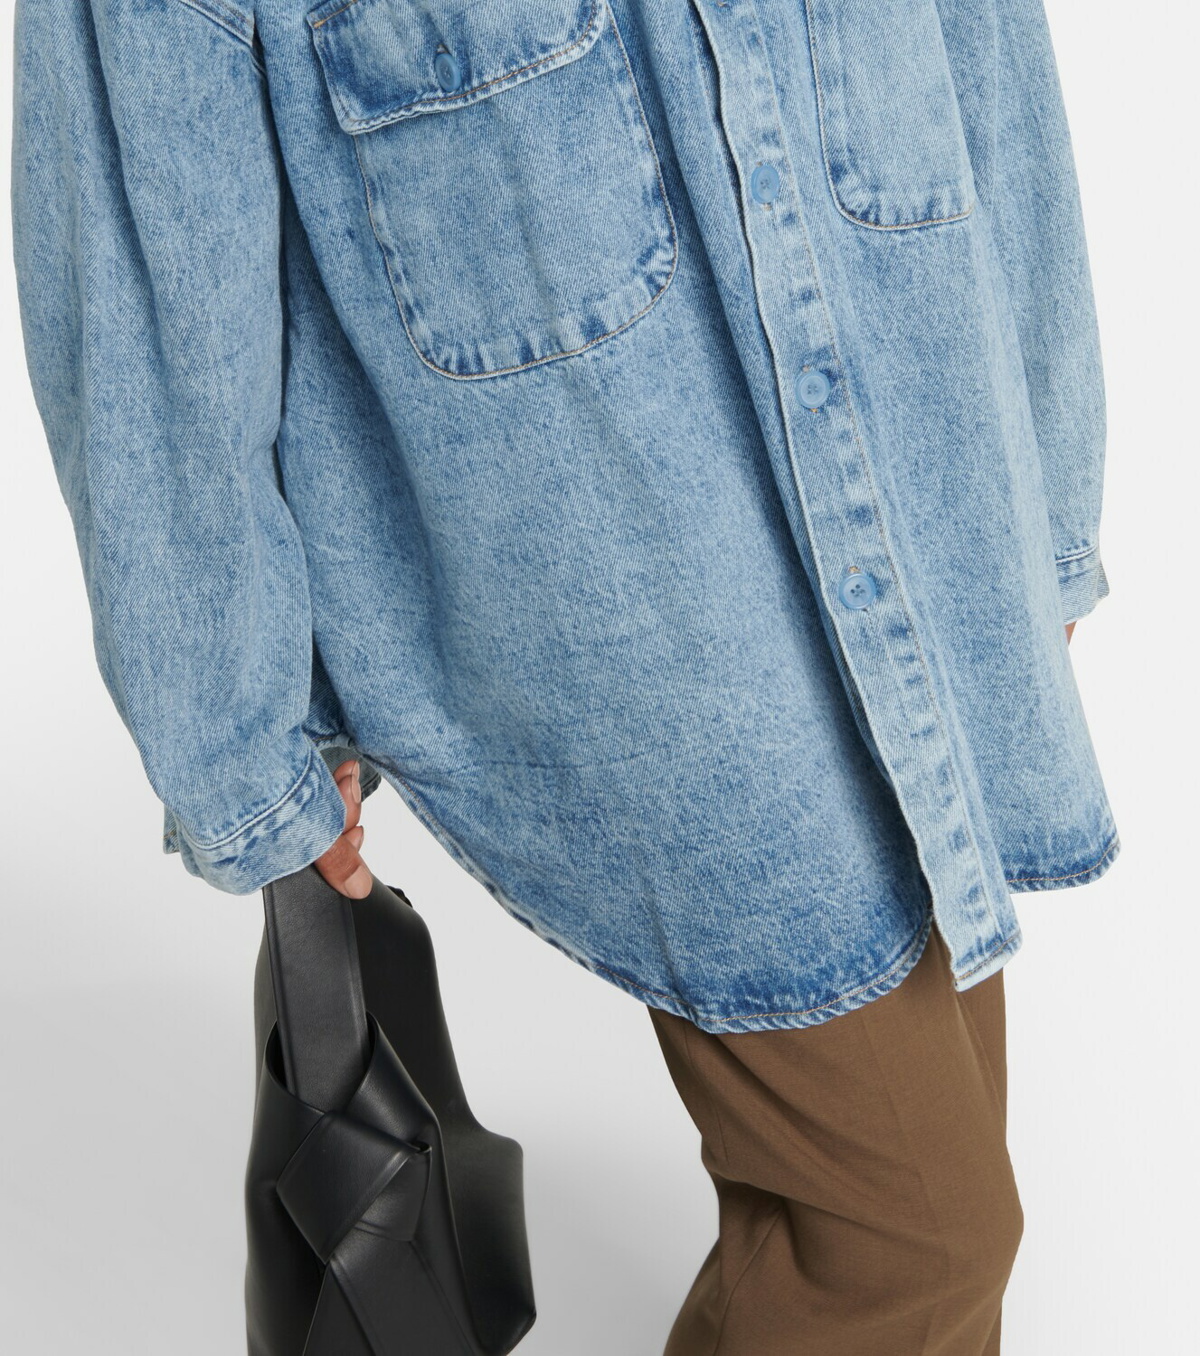 LOOKUB Women's Jean Jackets for Women Fashion Fleece Lined Jeans Shirts  Coats Button Down Front Pockets Womens Denim Jacket with Frayed Hem Trendy,  S, Dark Blue at Amazon Women's Coats Shop